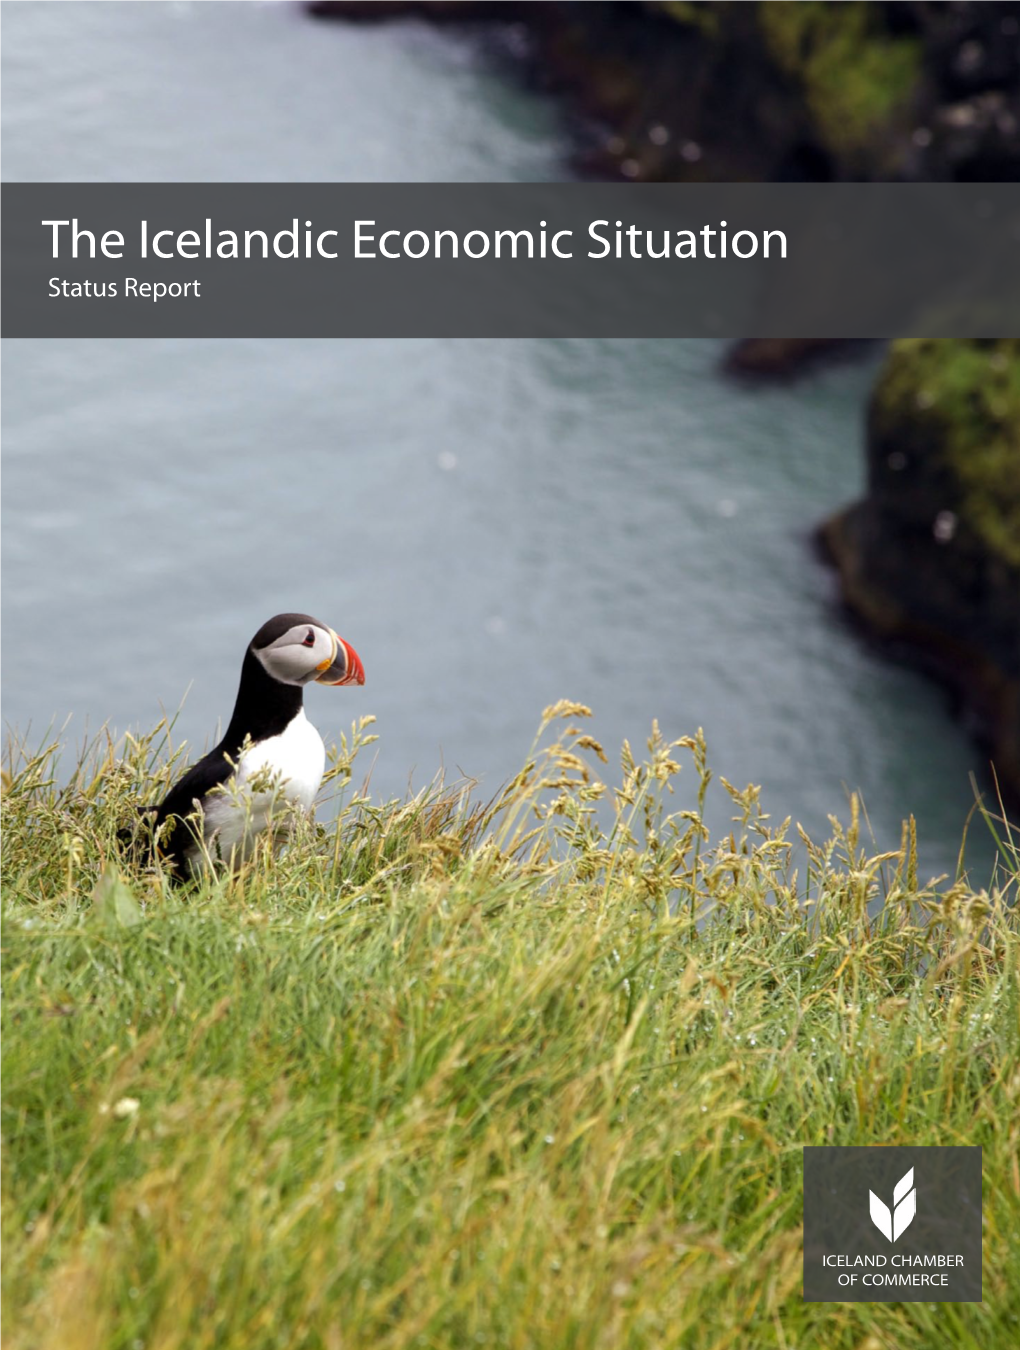 The Icelandic Economic Situation Status Report